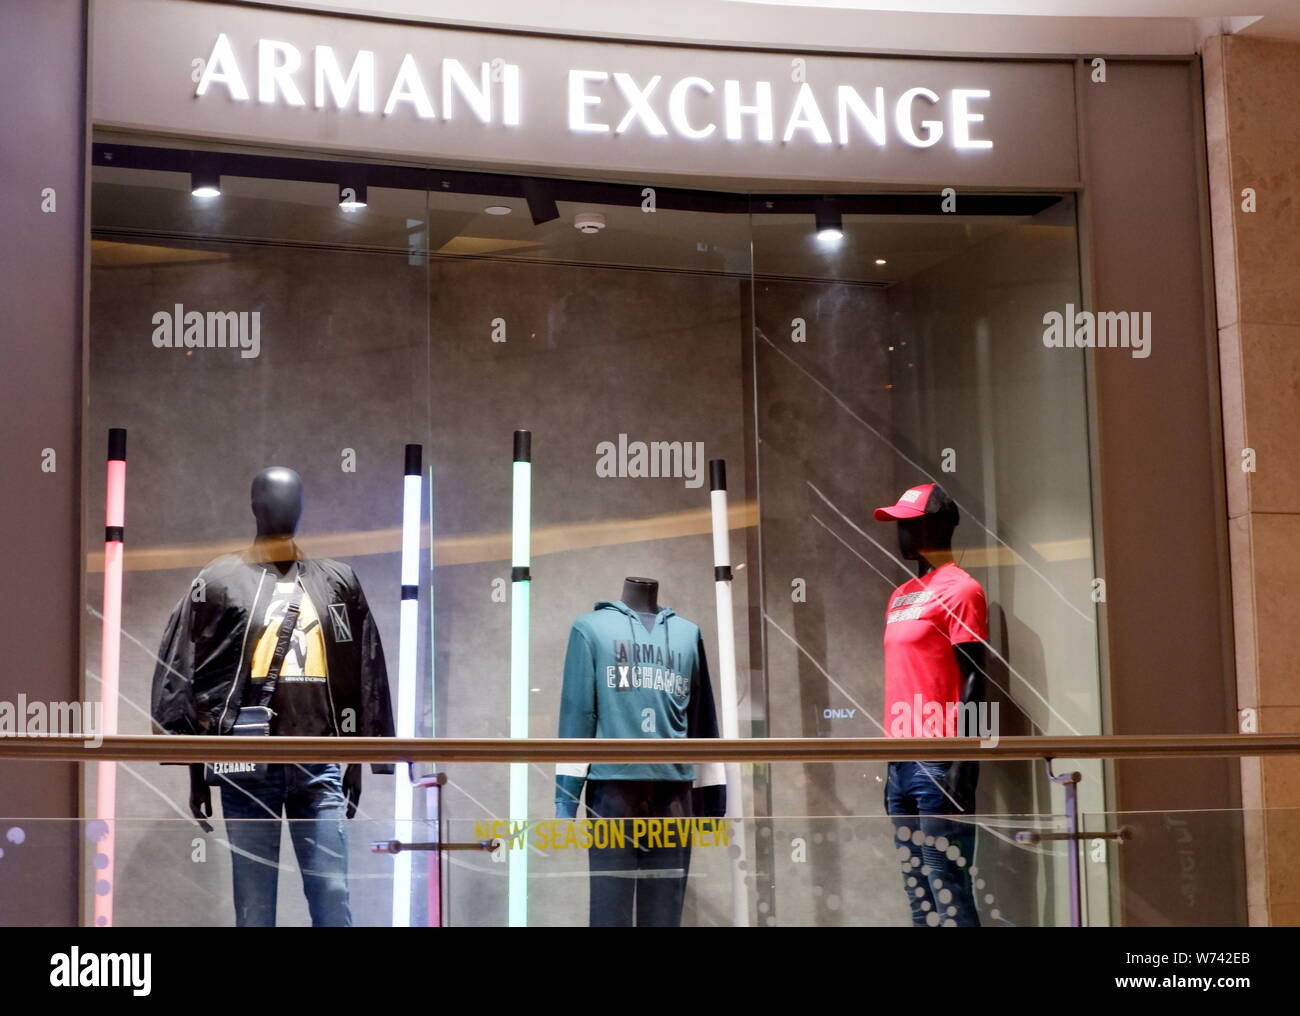 armani exchange trafford centre